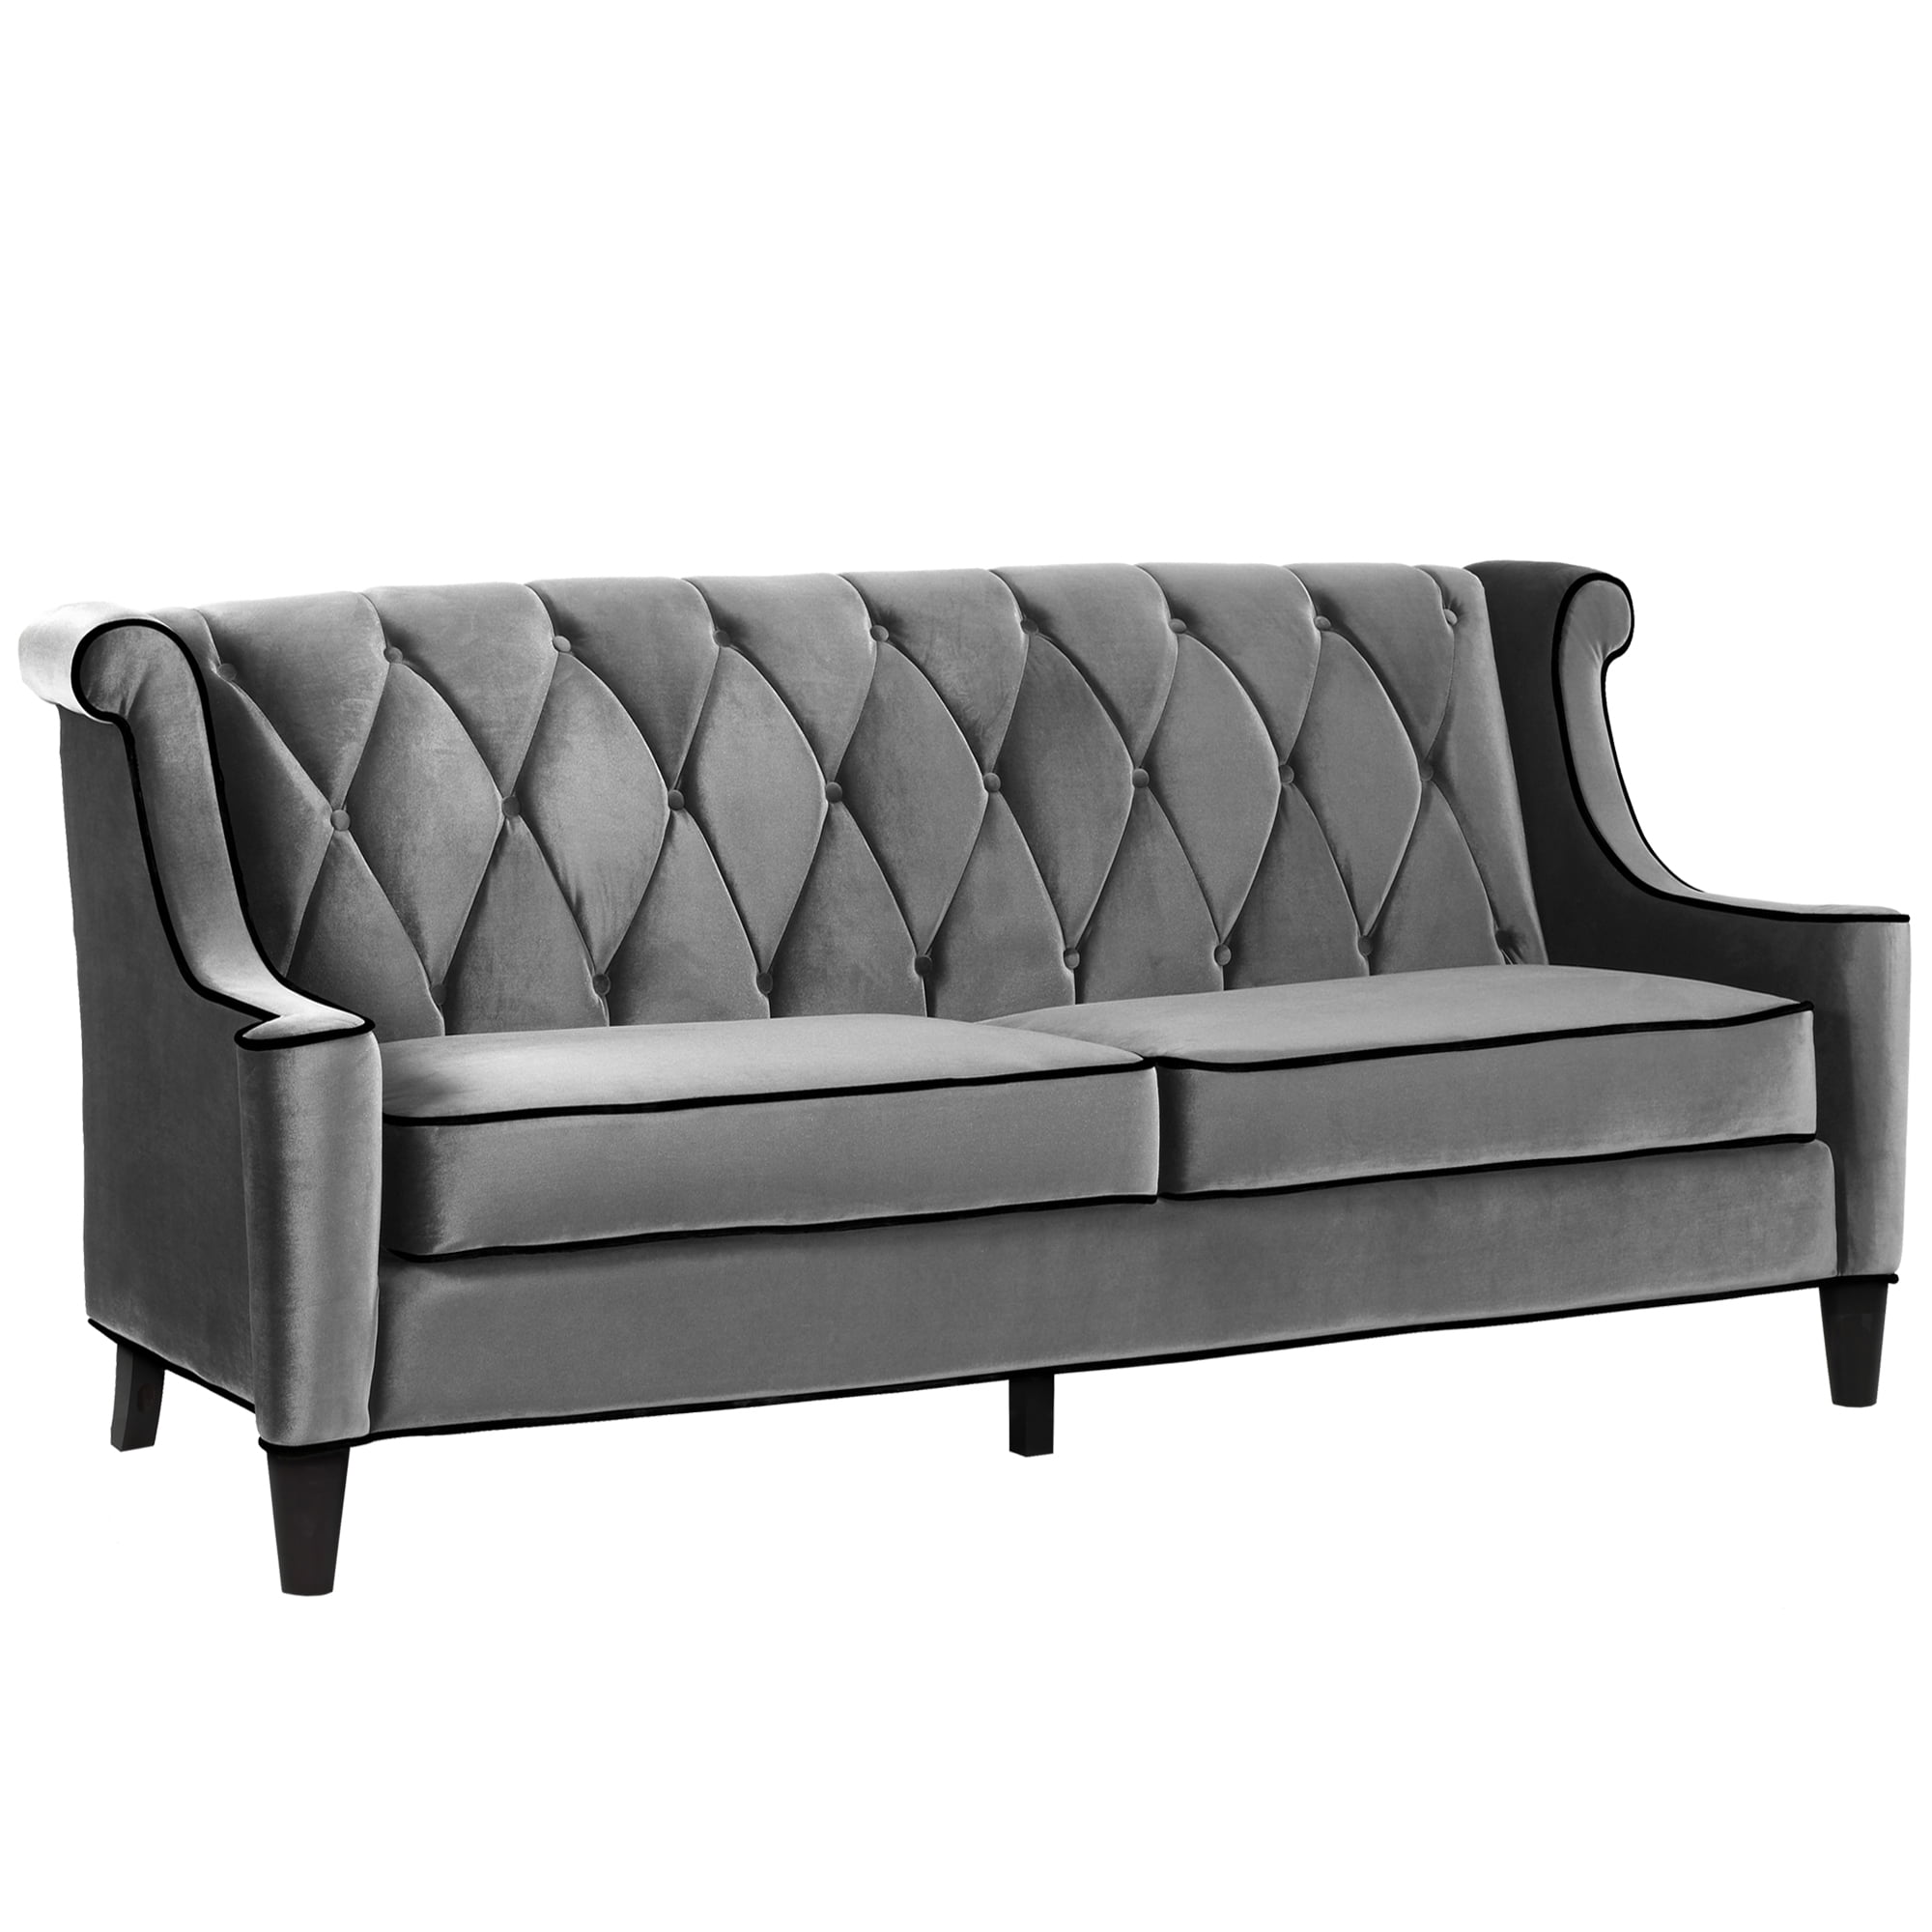 Barrister Sofa, Gray Velvet with Black Piping - Walmart.com - Walmart.com